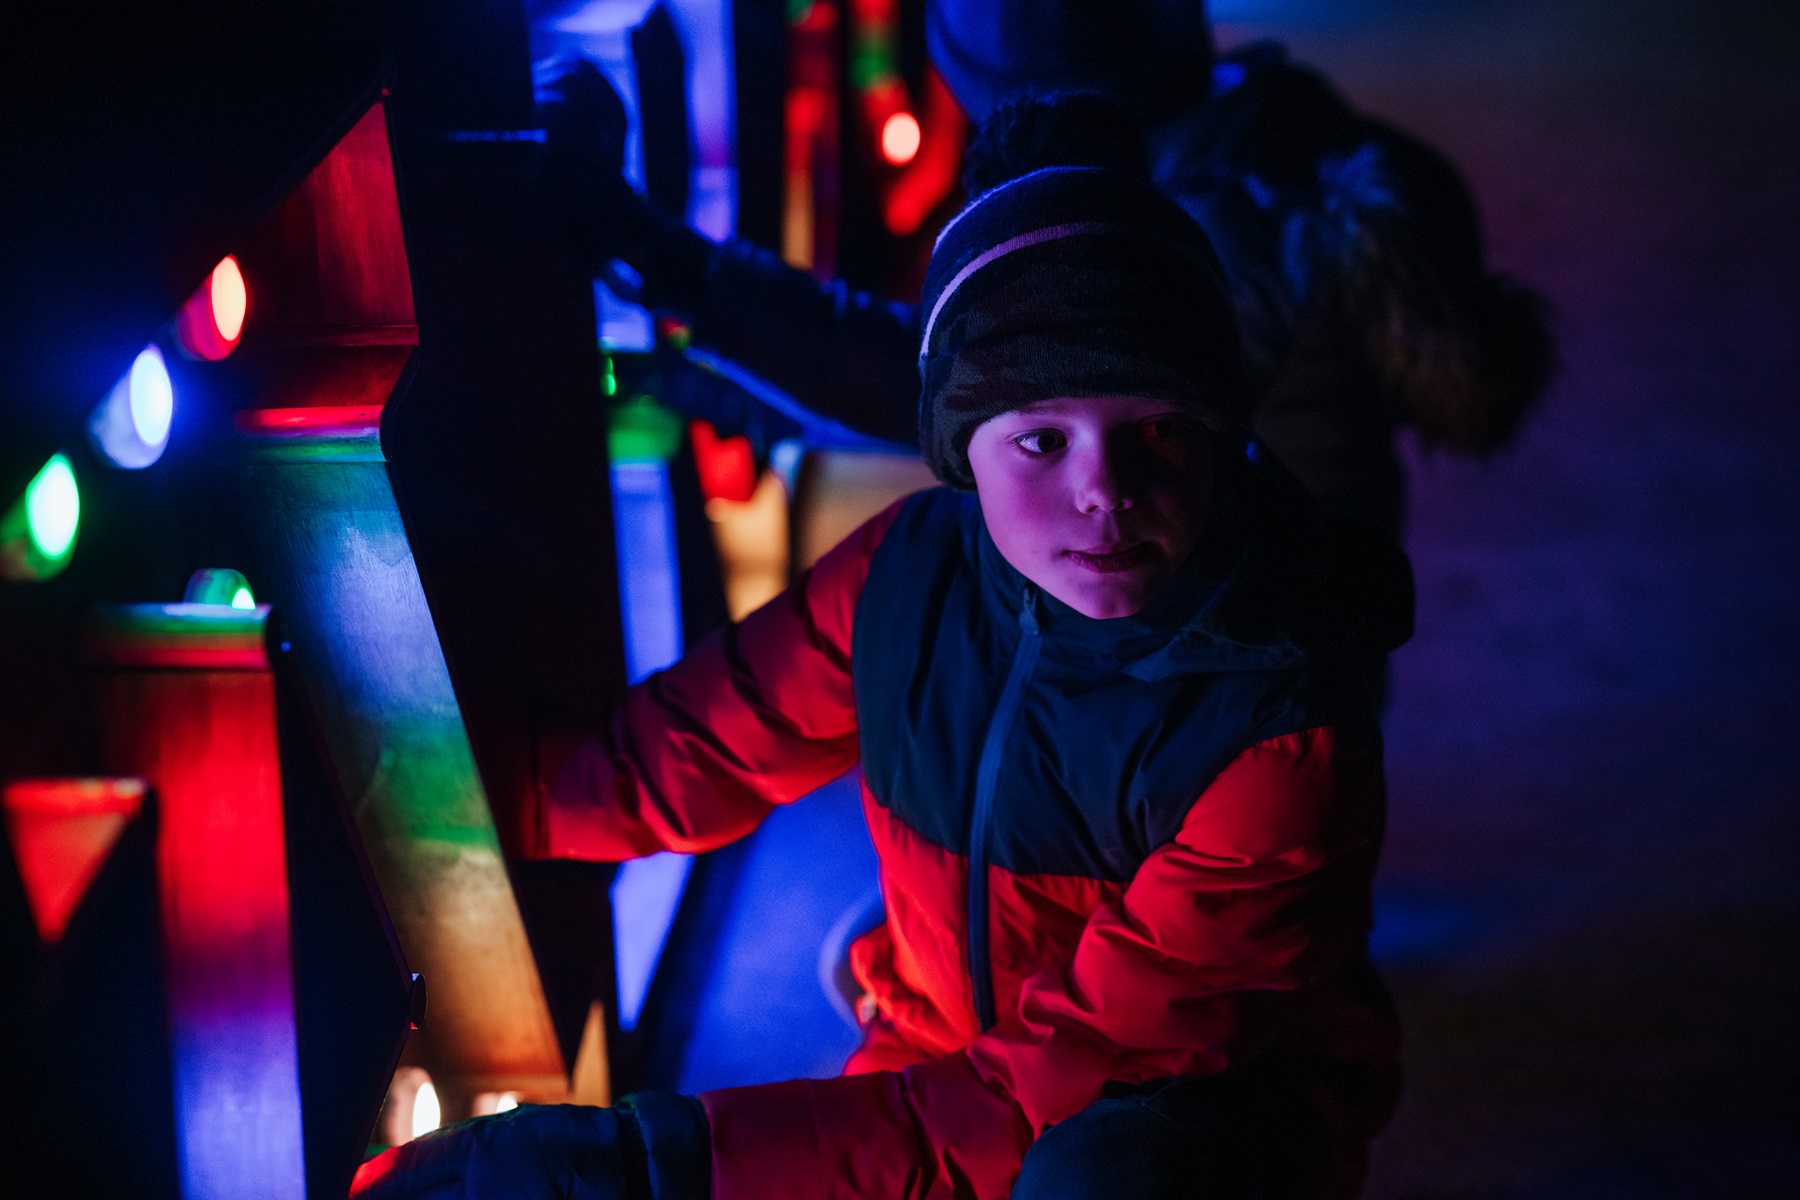 Child interacting with a display at Illuminated Arboretum